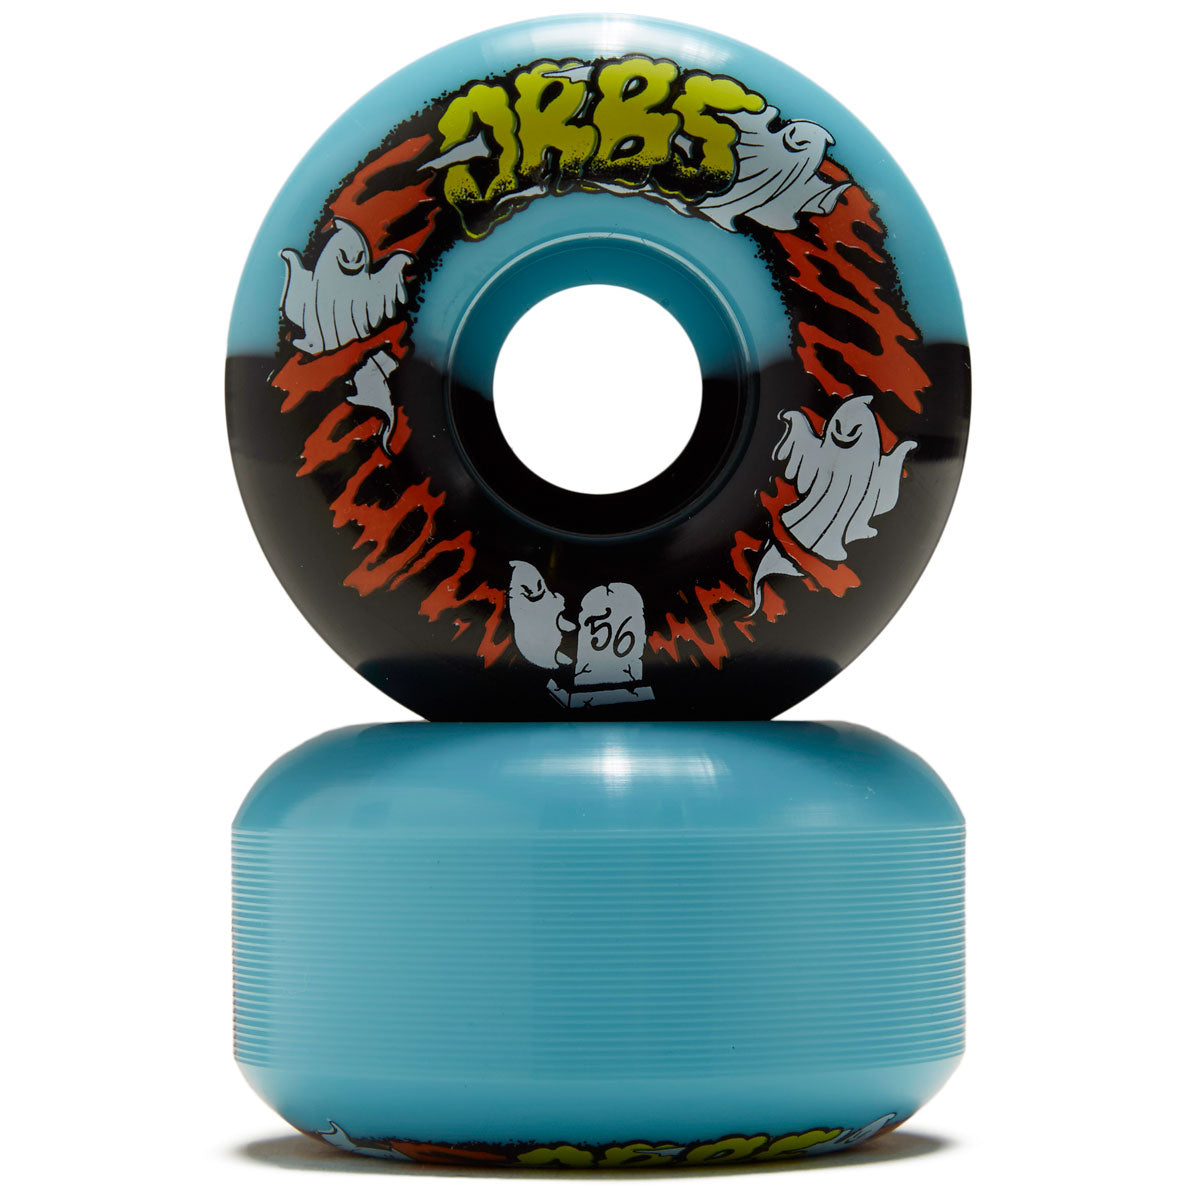 Welcome Orbs Apparitions Round 99a Skateboard Wheels - Black/Blue Splits - 56mm image 2